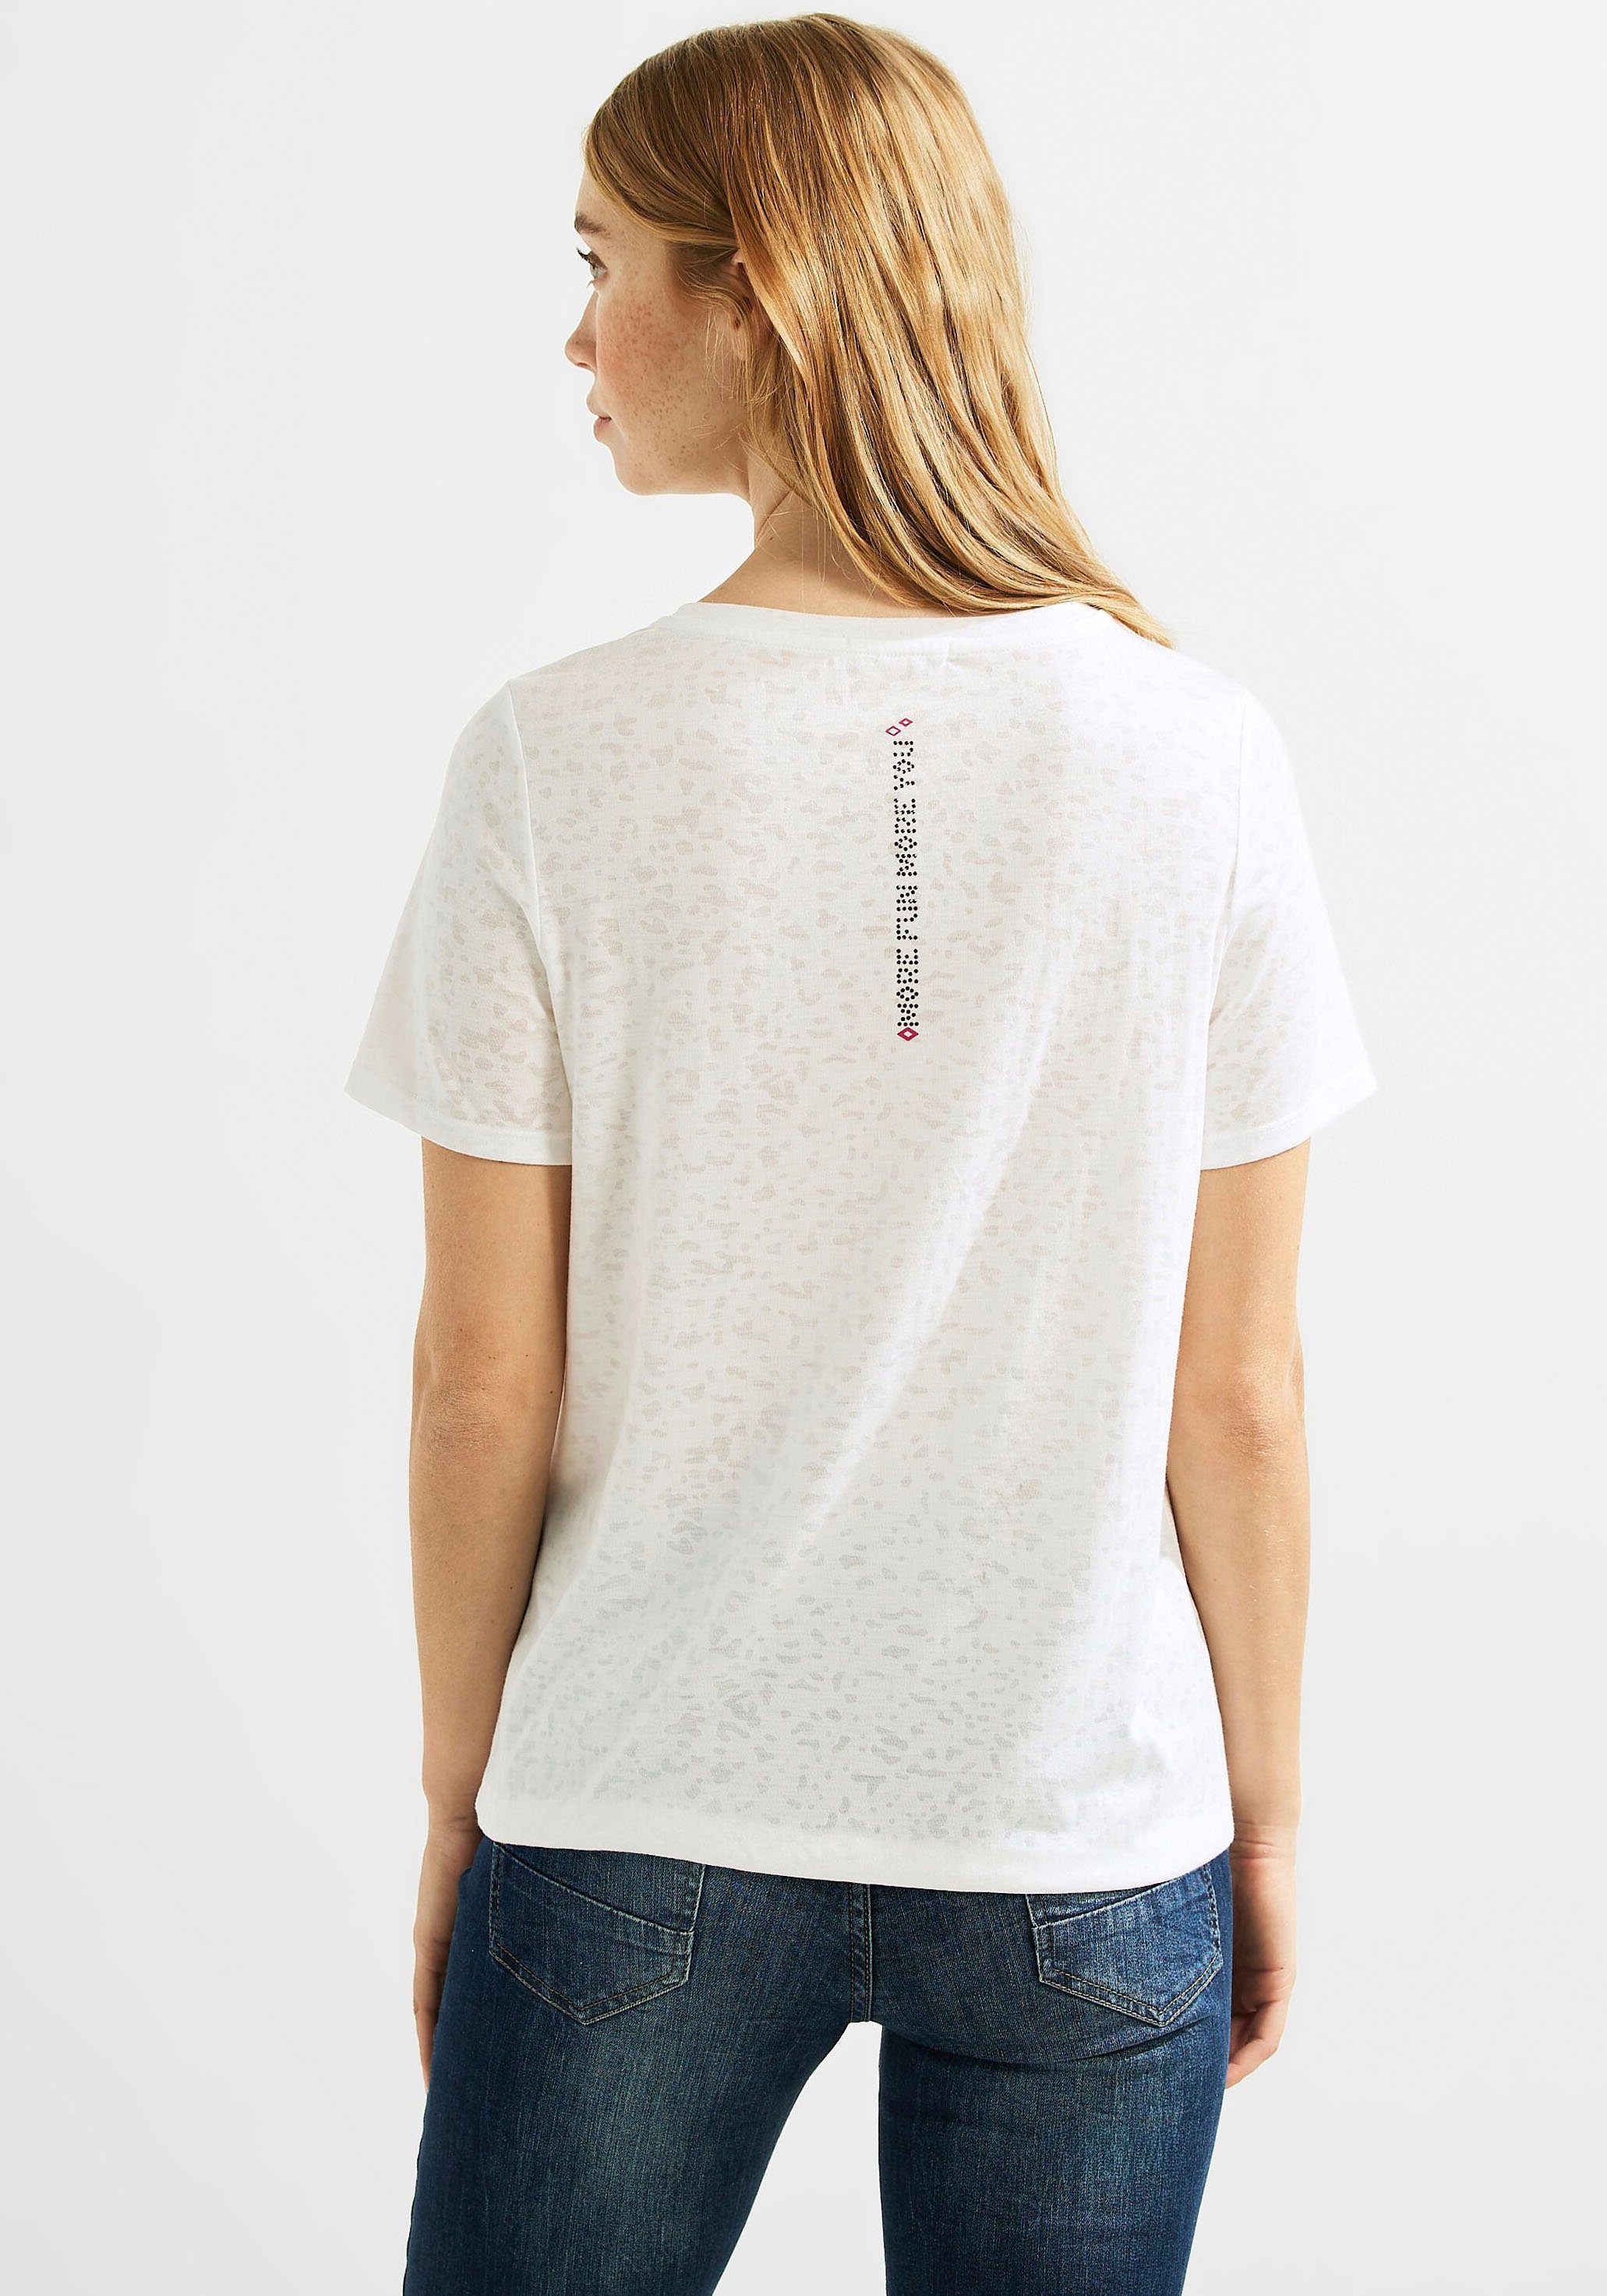 vanilla im T-Shirt Burn-Out-Design white Cecil